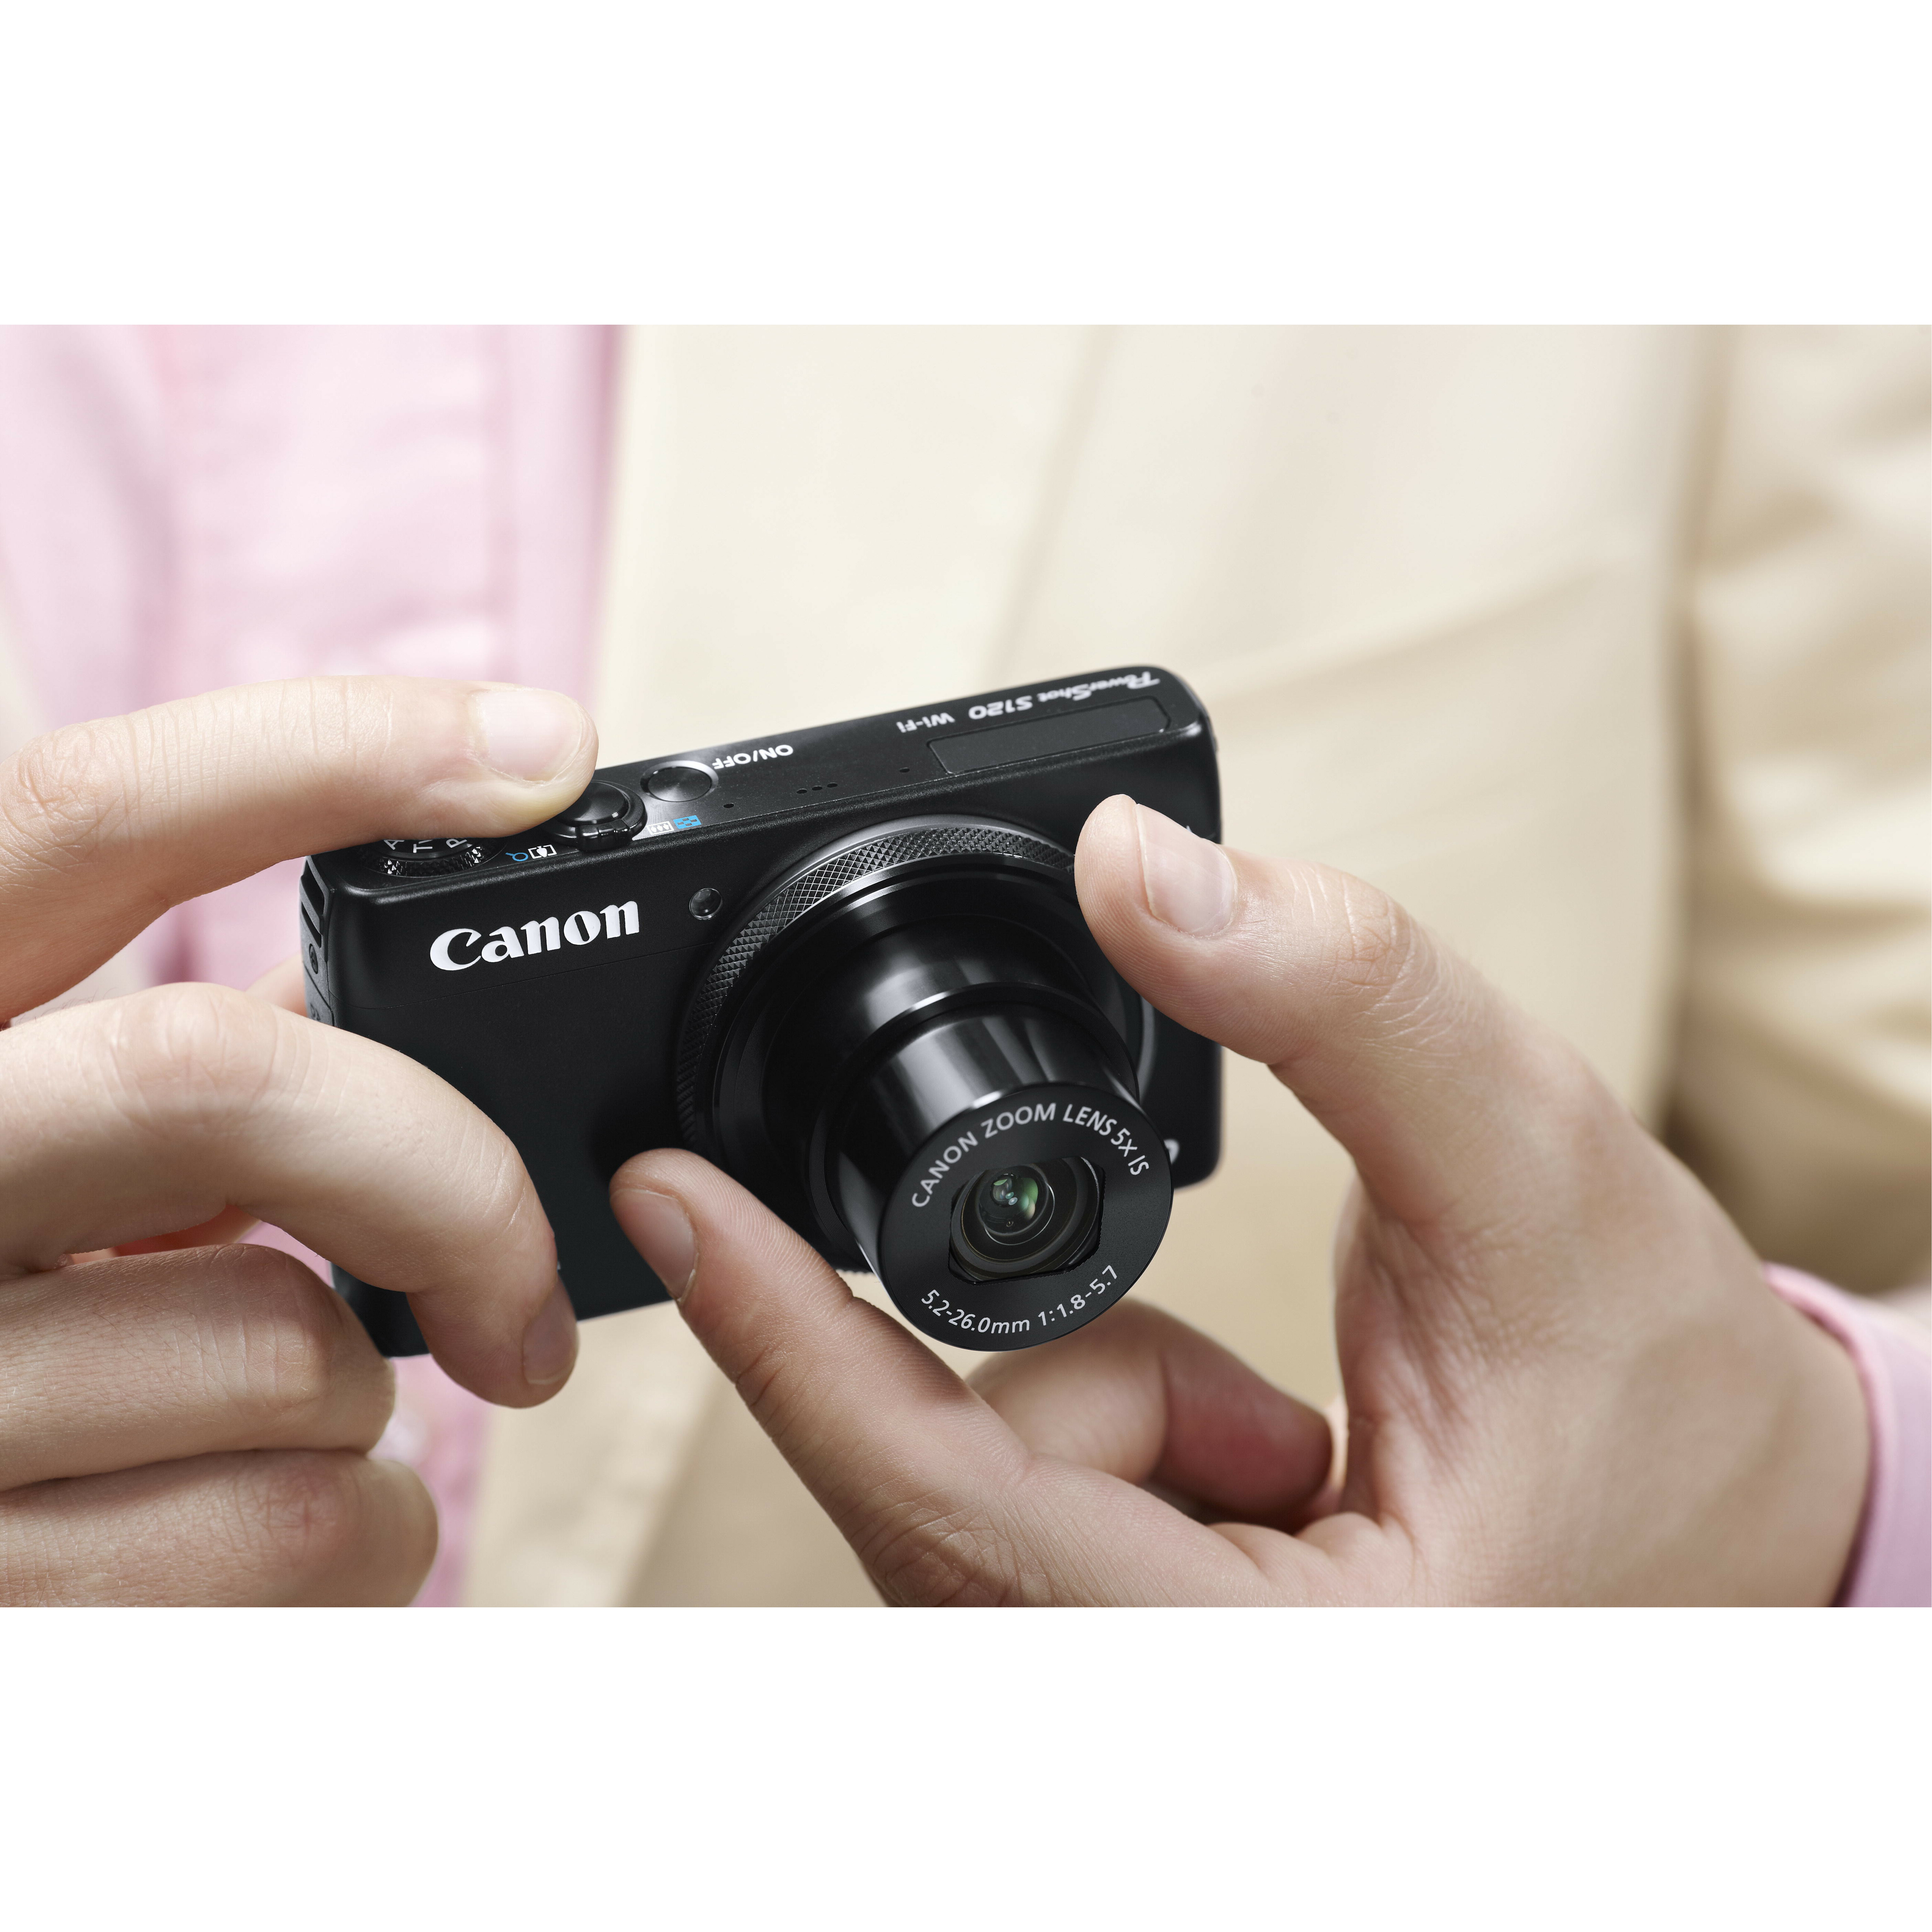 Canon PowerShot S120 12.1 Megapixel Compact Camera, Black - image 4 of 6